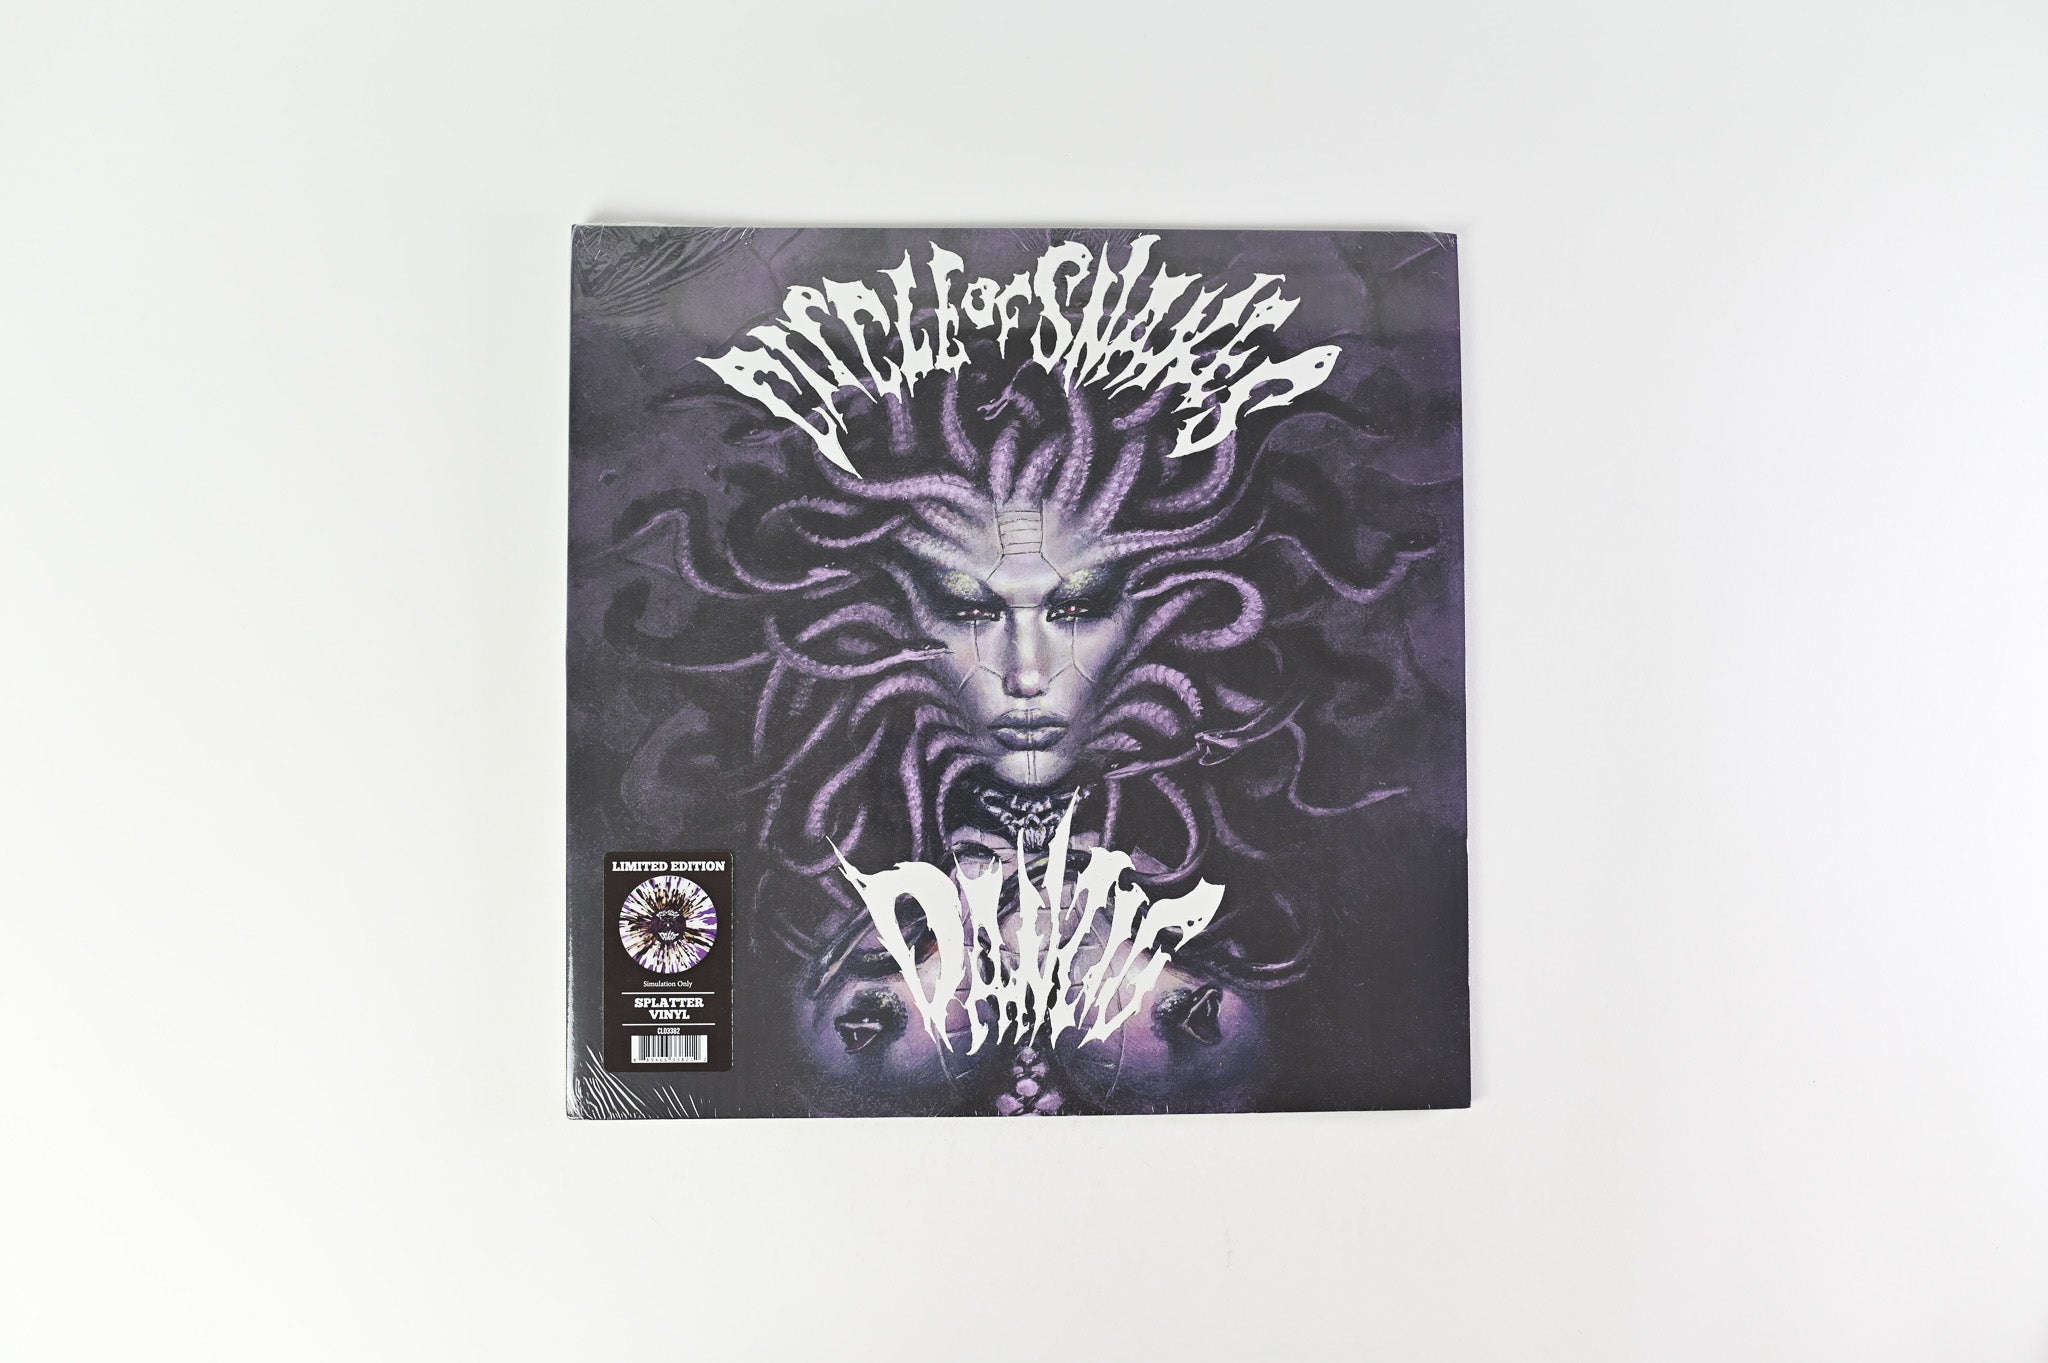 Danzig - Circle Of Snakes on Cleopatra - Sealed - Splatter Vinyl